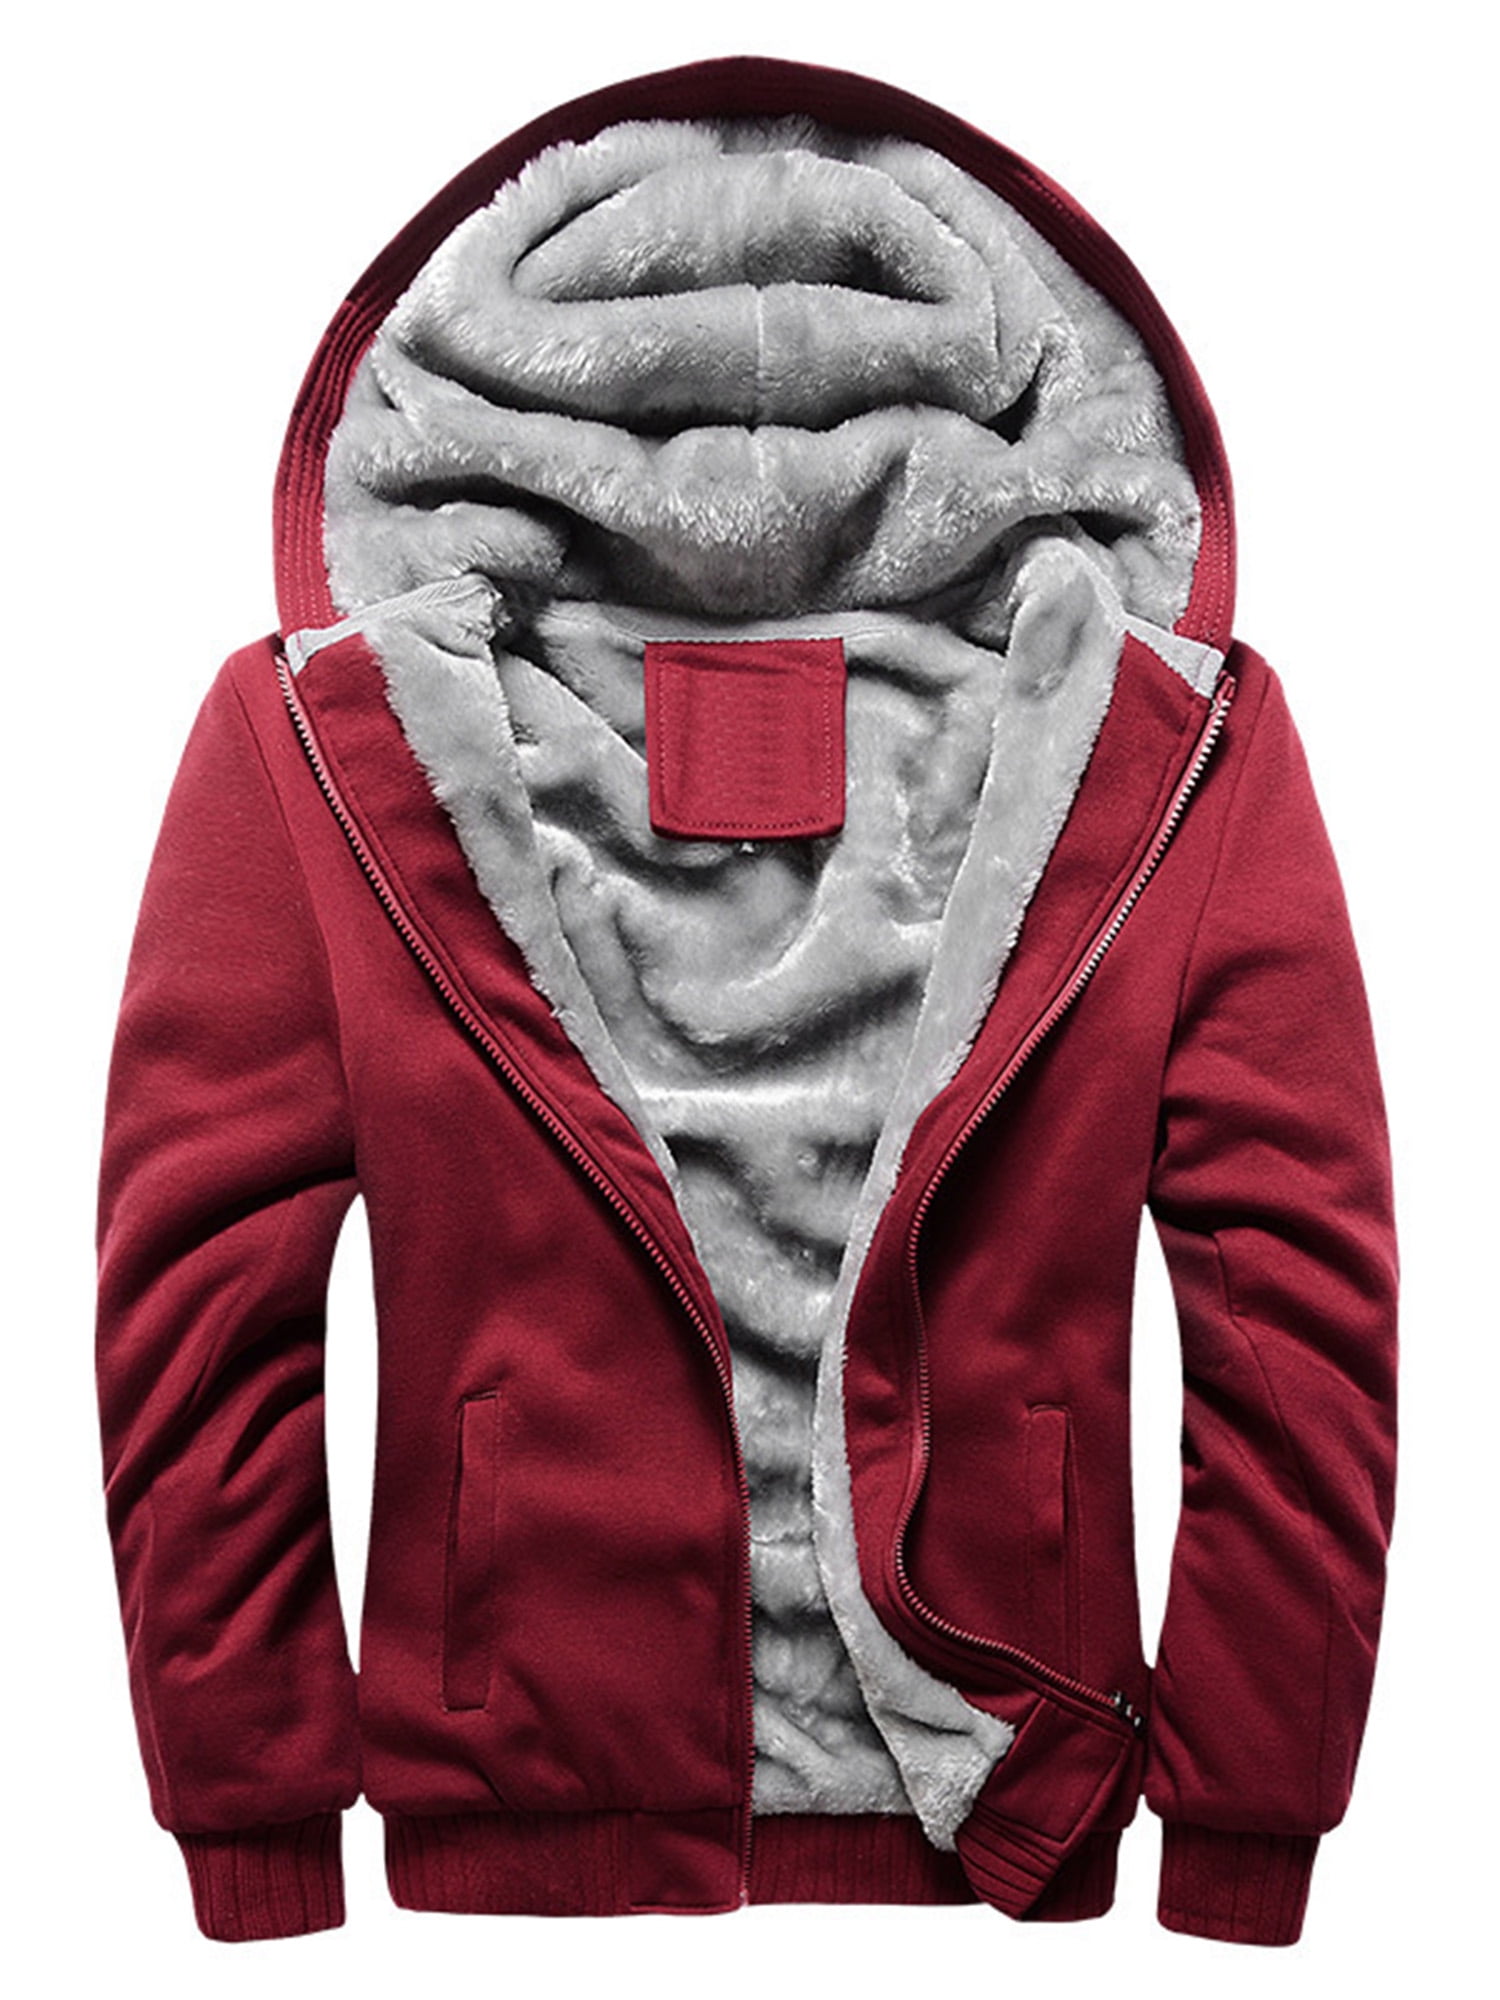 Plus size men's hoodies brand soft warm hooded sweatshirt men winter clothes male hooded sweatshirt